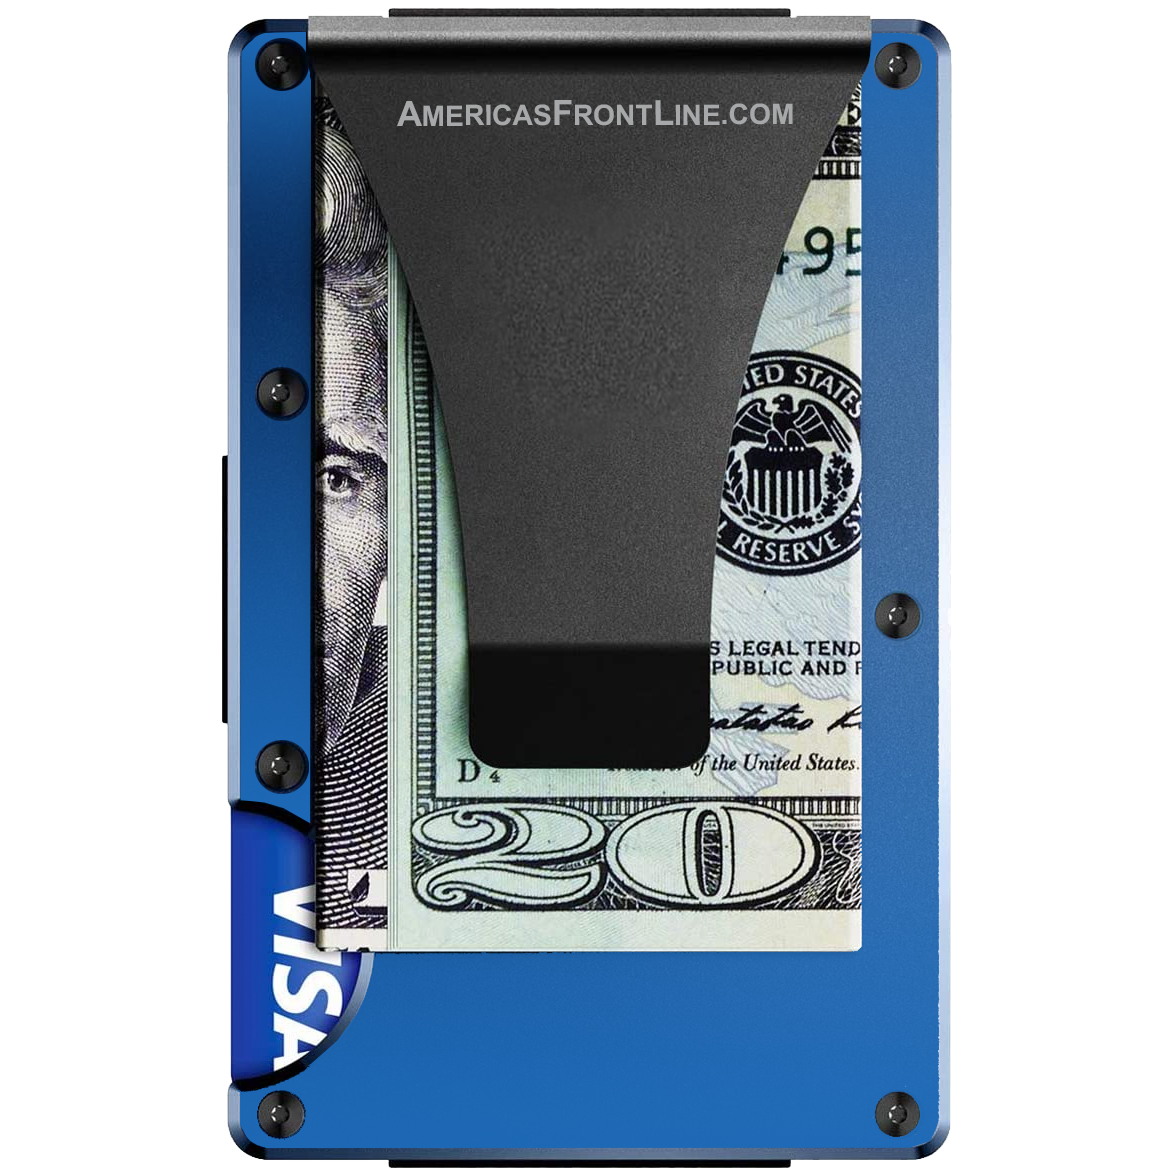 The Ridge Minimalist Slim Wallet For Men - RFID Blocking Front Pocket  Credit Card Holder - Aluminum Metal Small Mens Wallets with Cash Strap  (Carbon